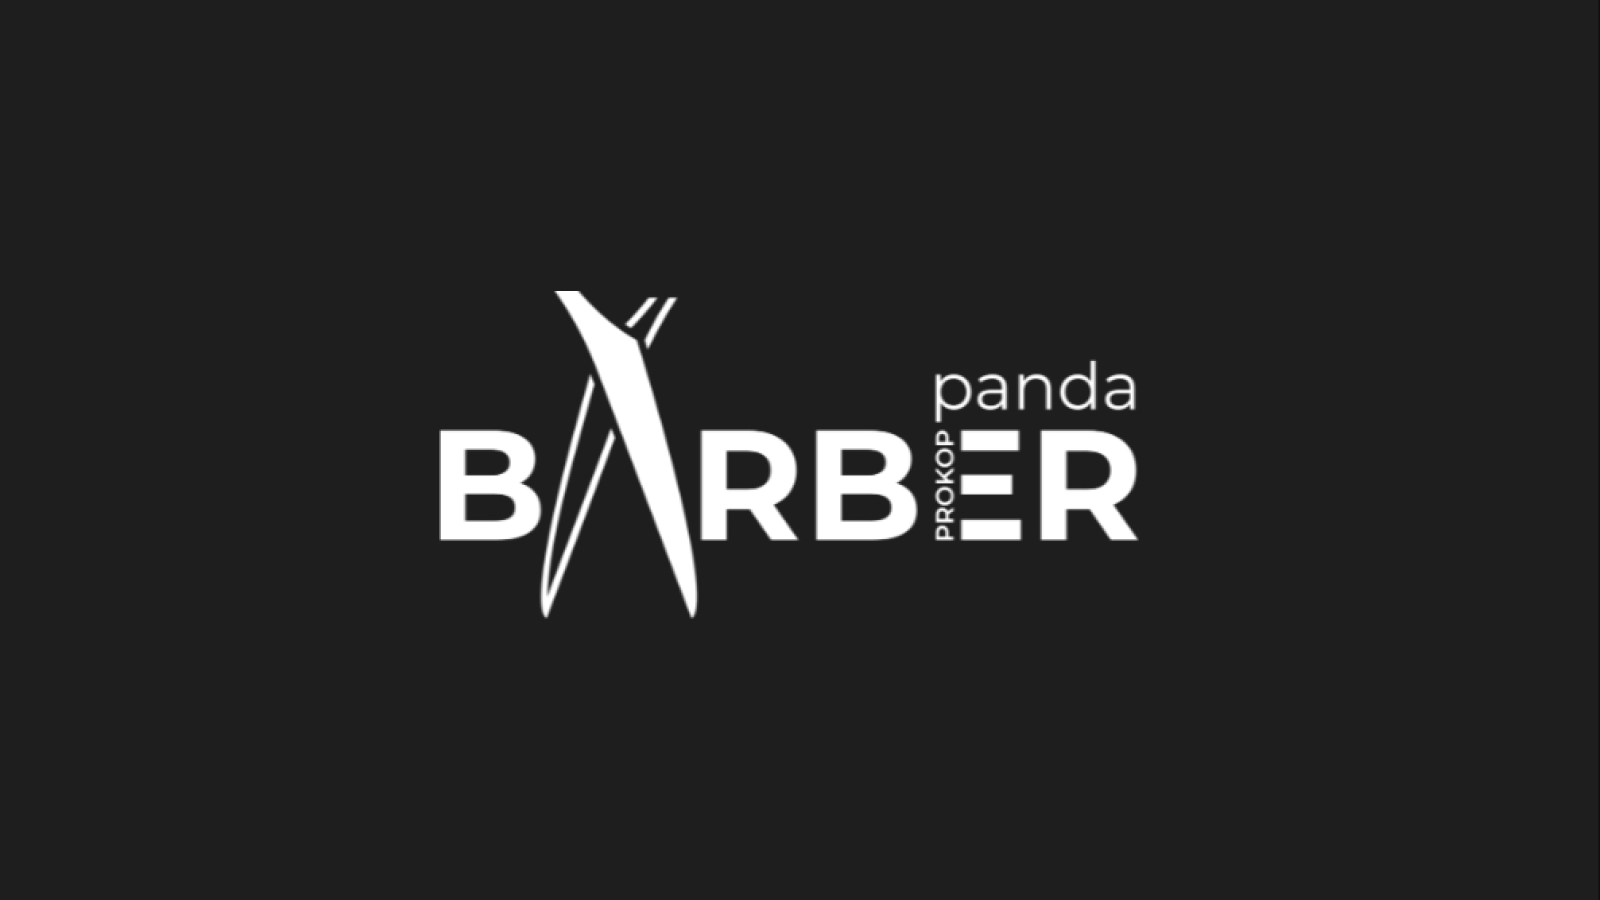 Prokop "Panda" Barber